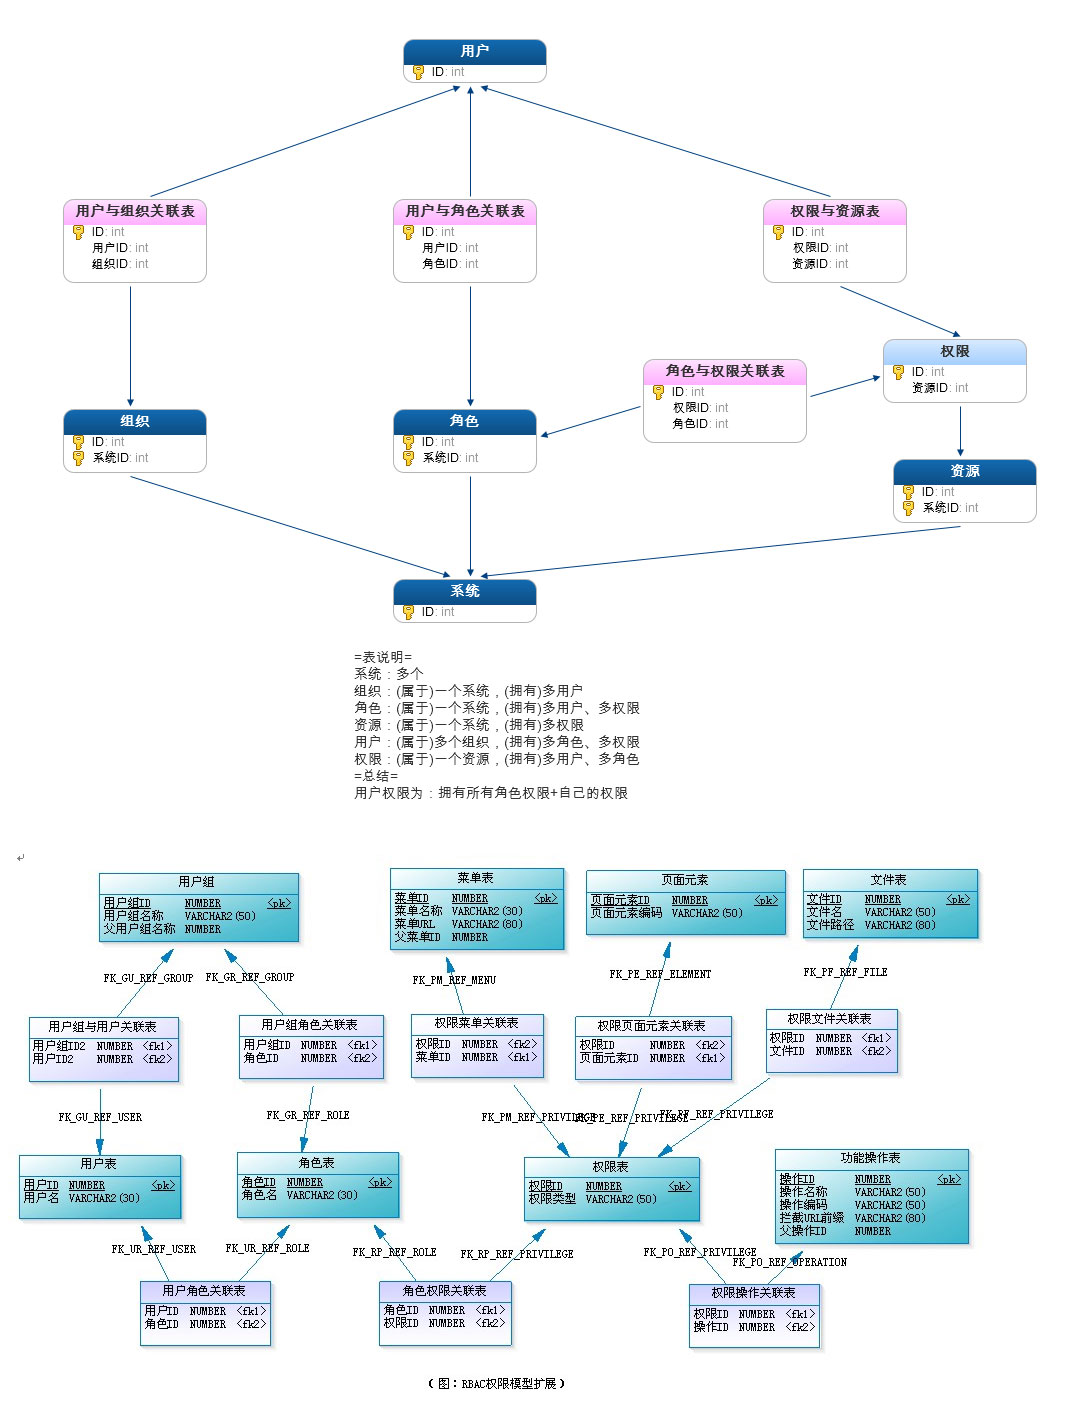 zheng-upms/zheng-upms-server/src/main/webapp/resources/zheng-upms-datamodel.jpg